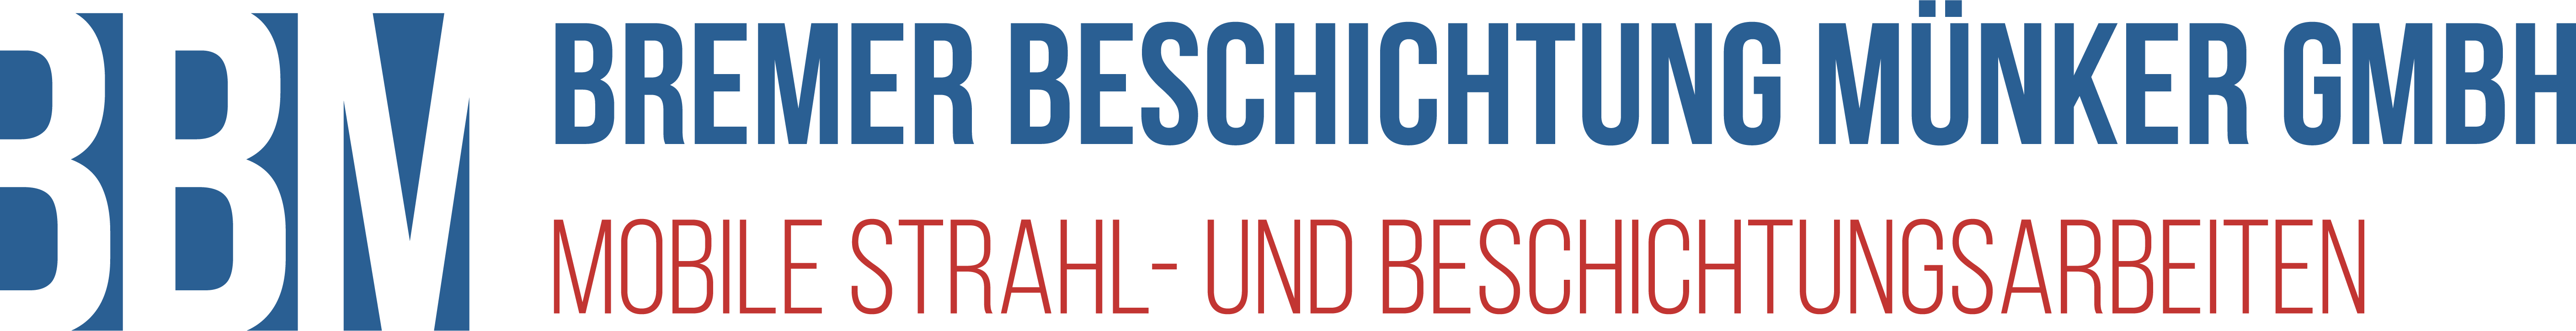 BBM Bremer Beschichtung Münker GmbH